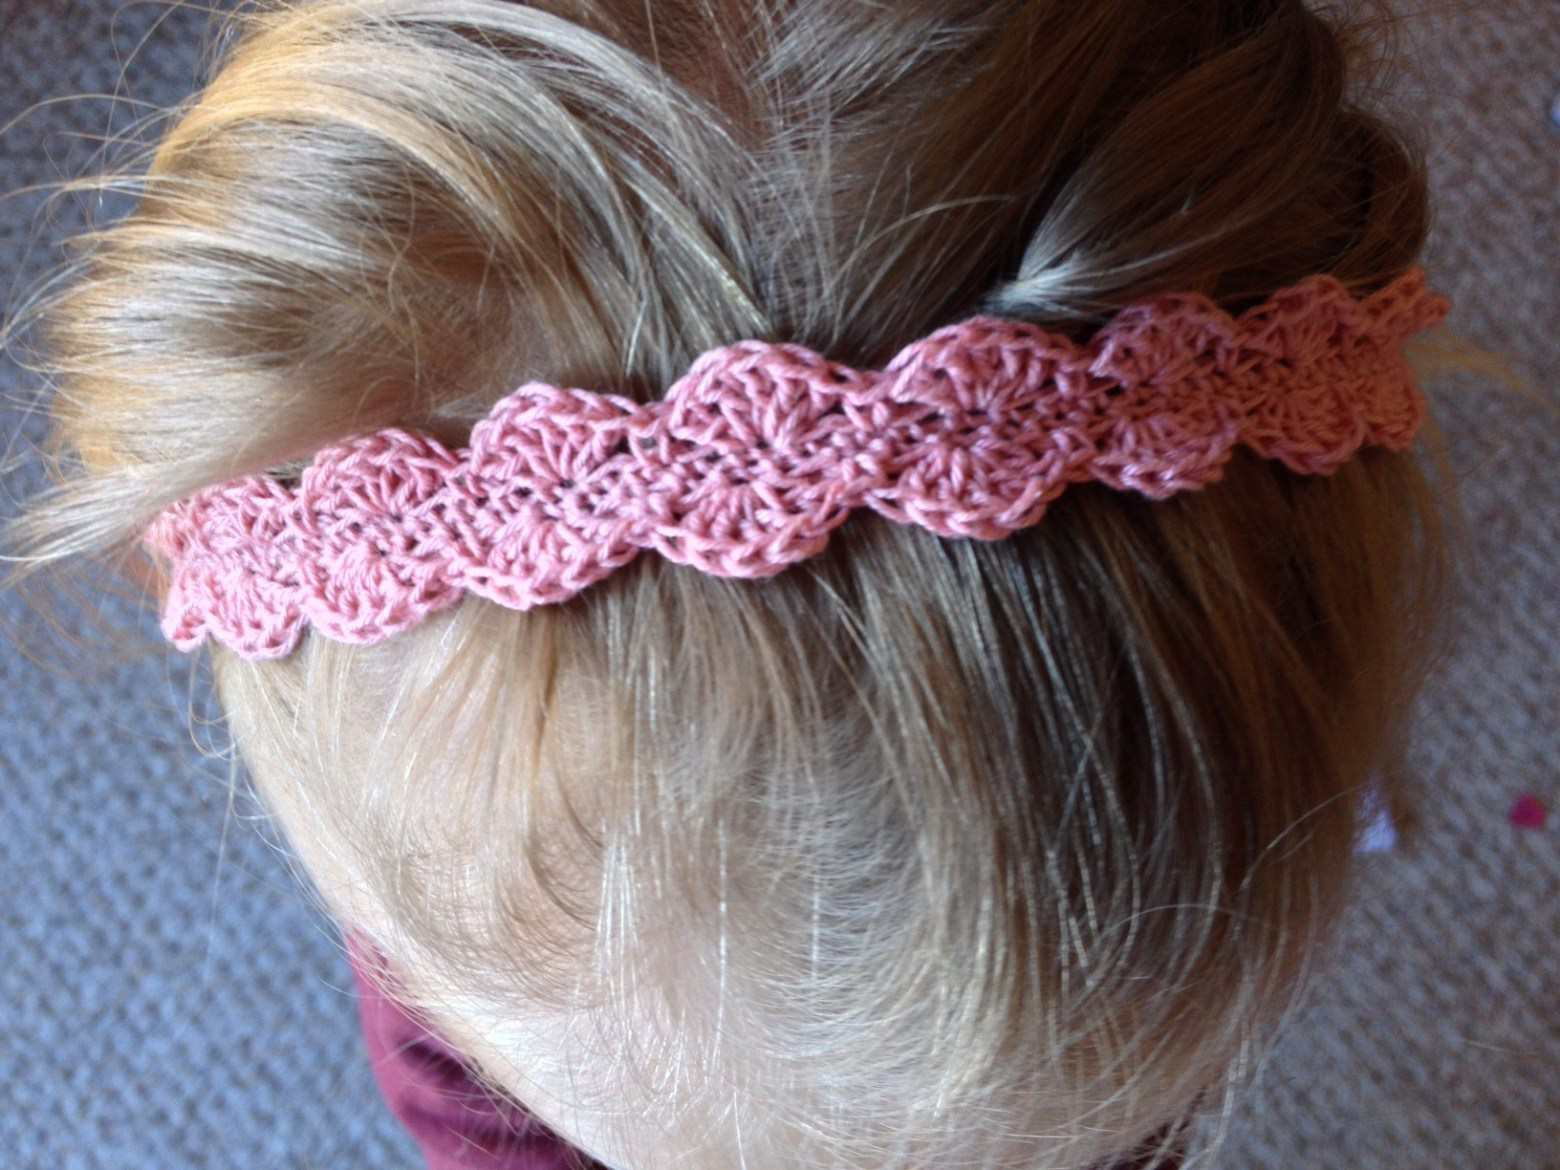 Crochet Hair Patterns 12 Free Patterns For Crochet Headbands